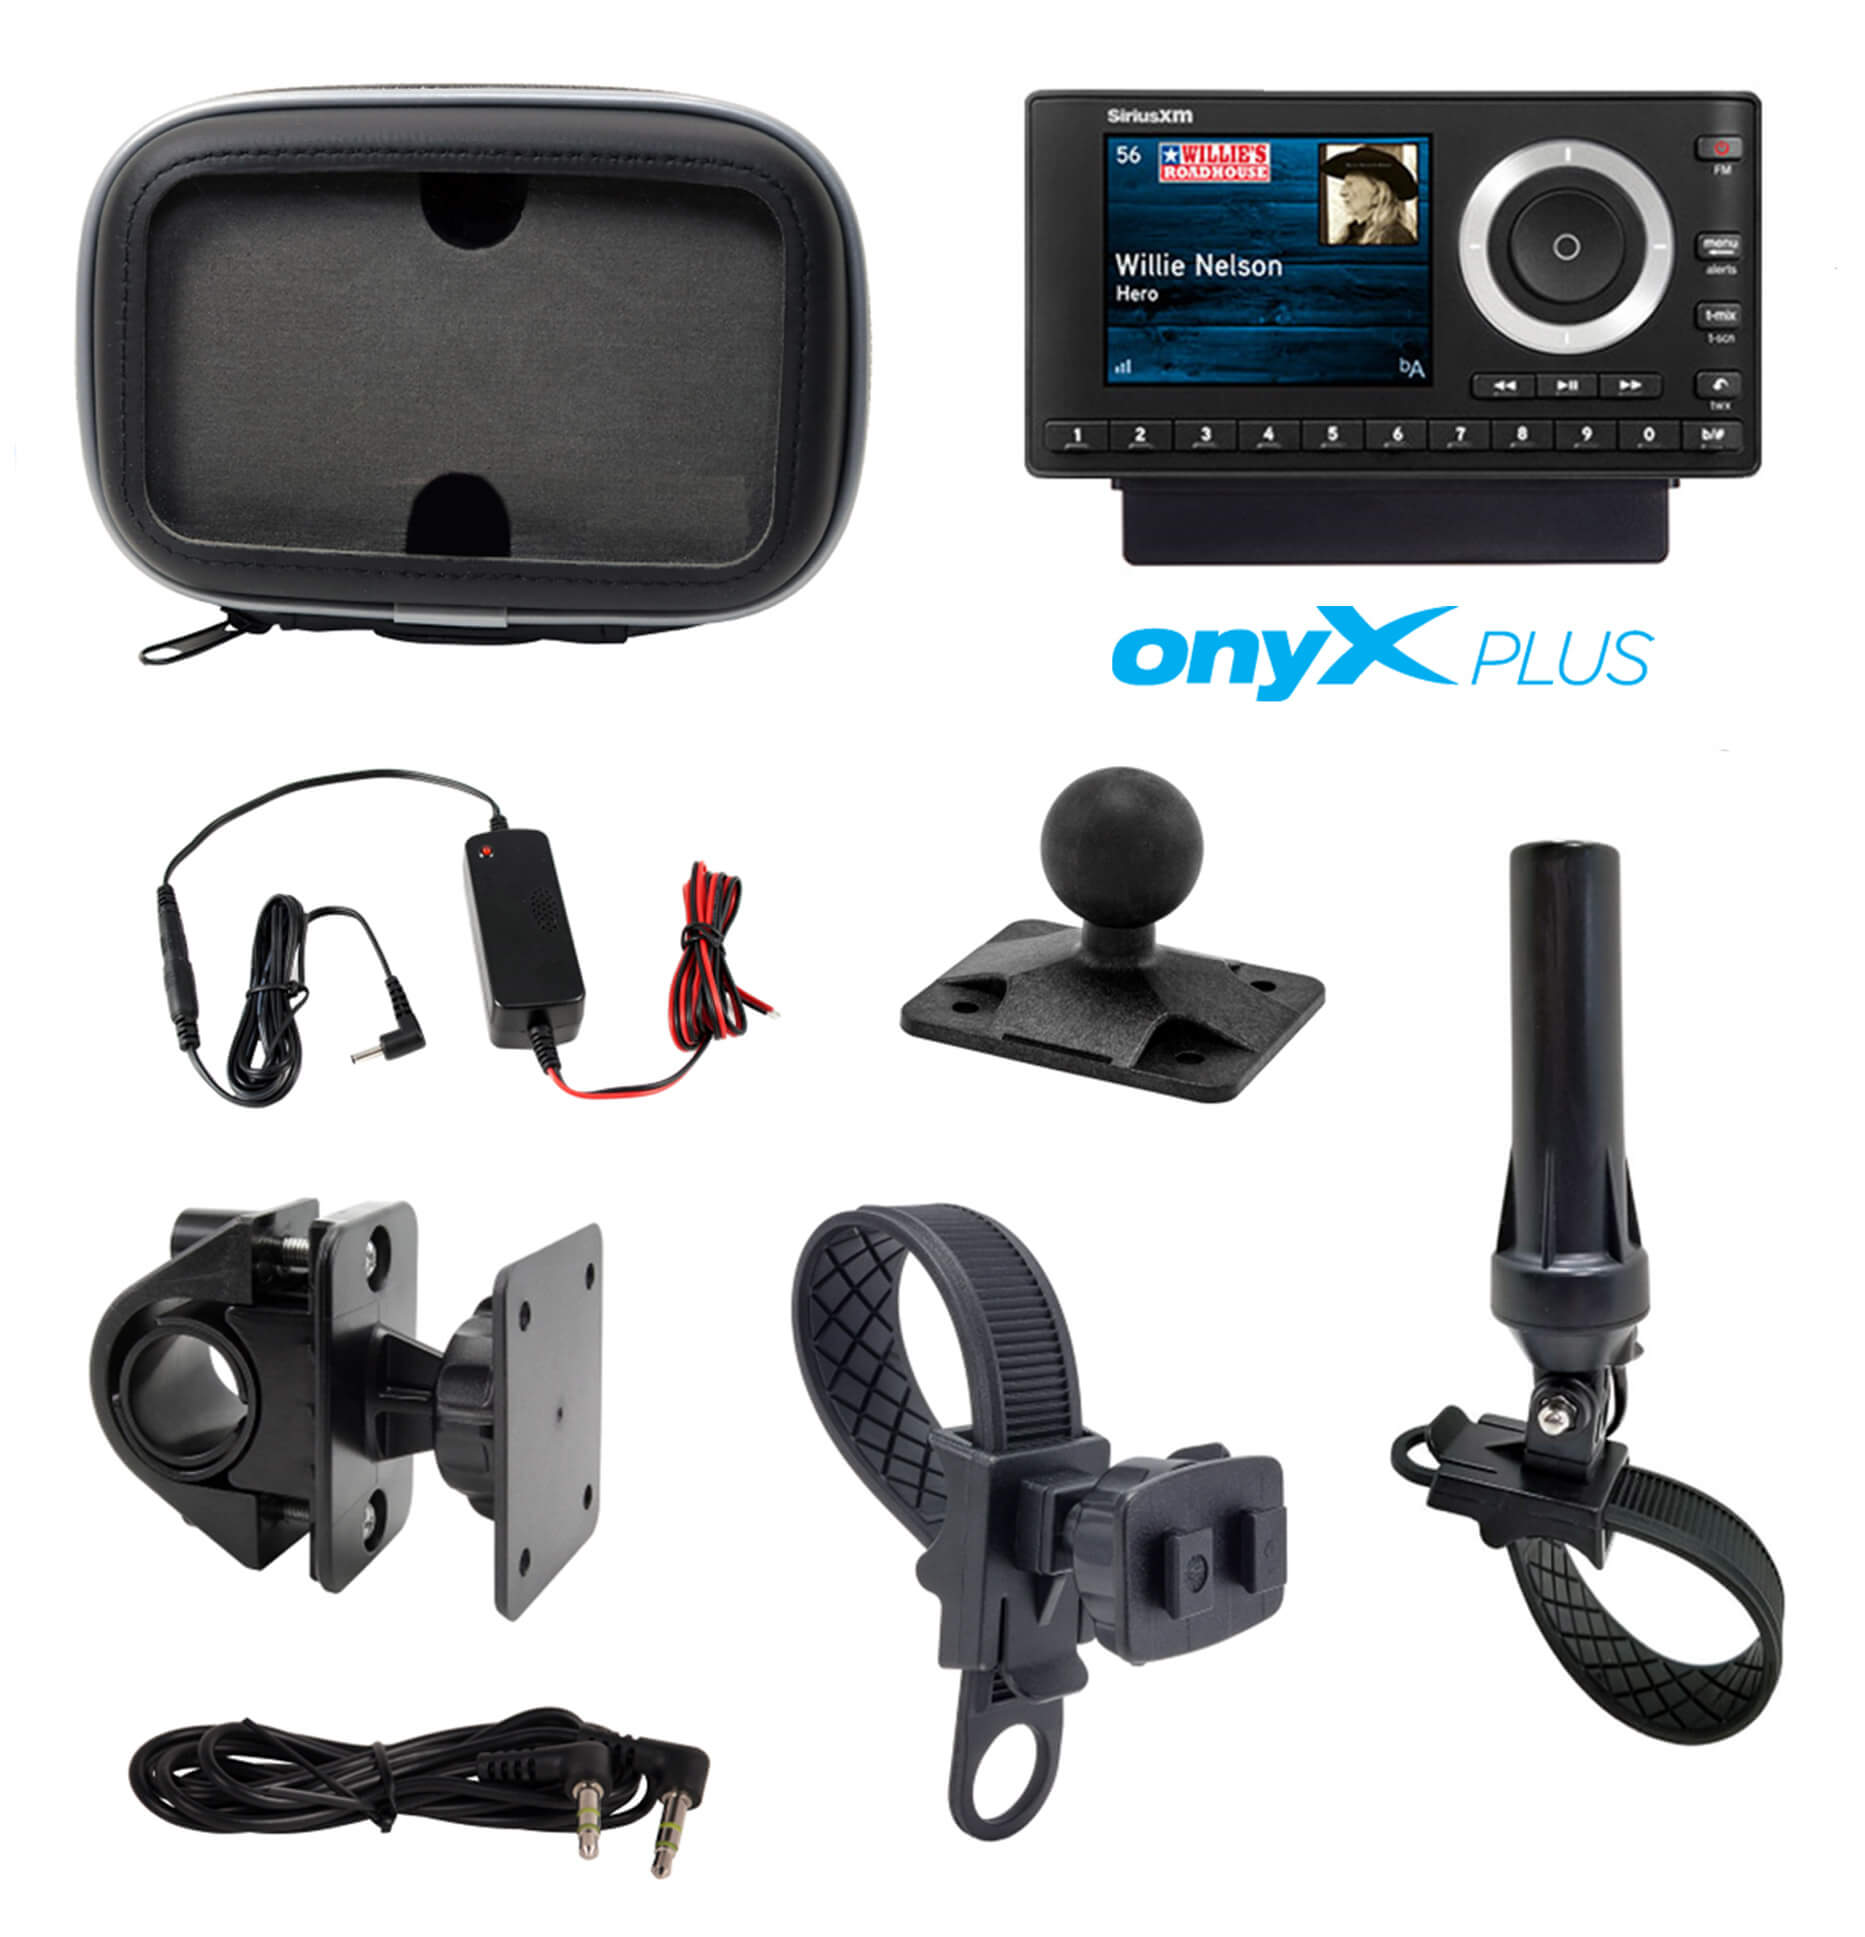 OnyX Plus Sirius XM Satellite Radio Motorcycle Kit with handlebar mount, 3 power options, waterproof protective case. 